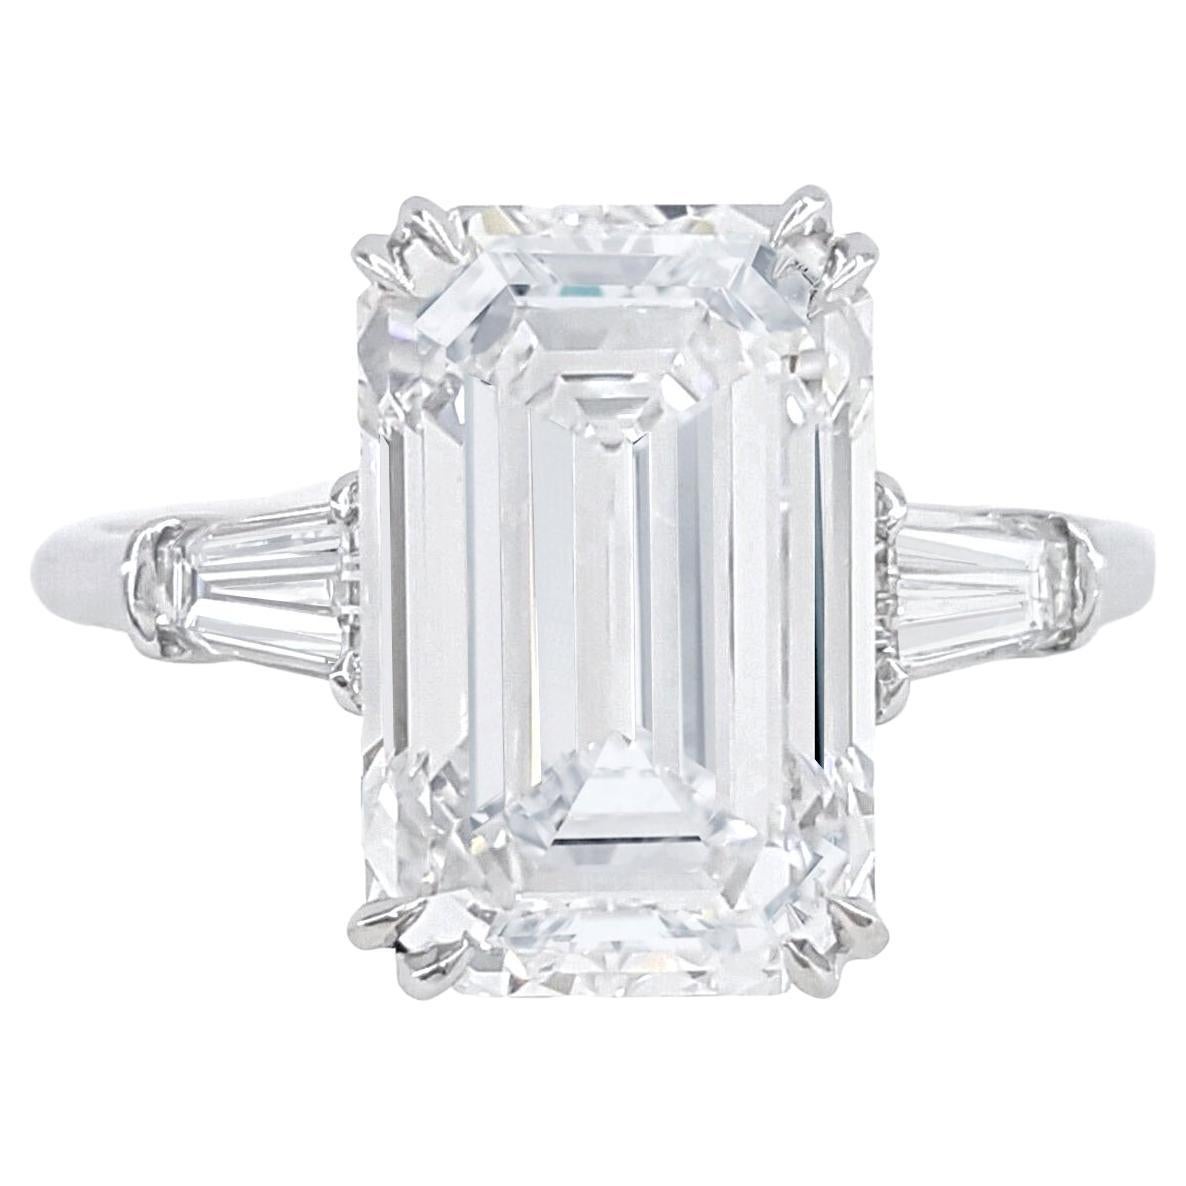 Harry Winston 4.75 Carat GIA Certified D Color Emerald Cut Diamond Ring For Sale